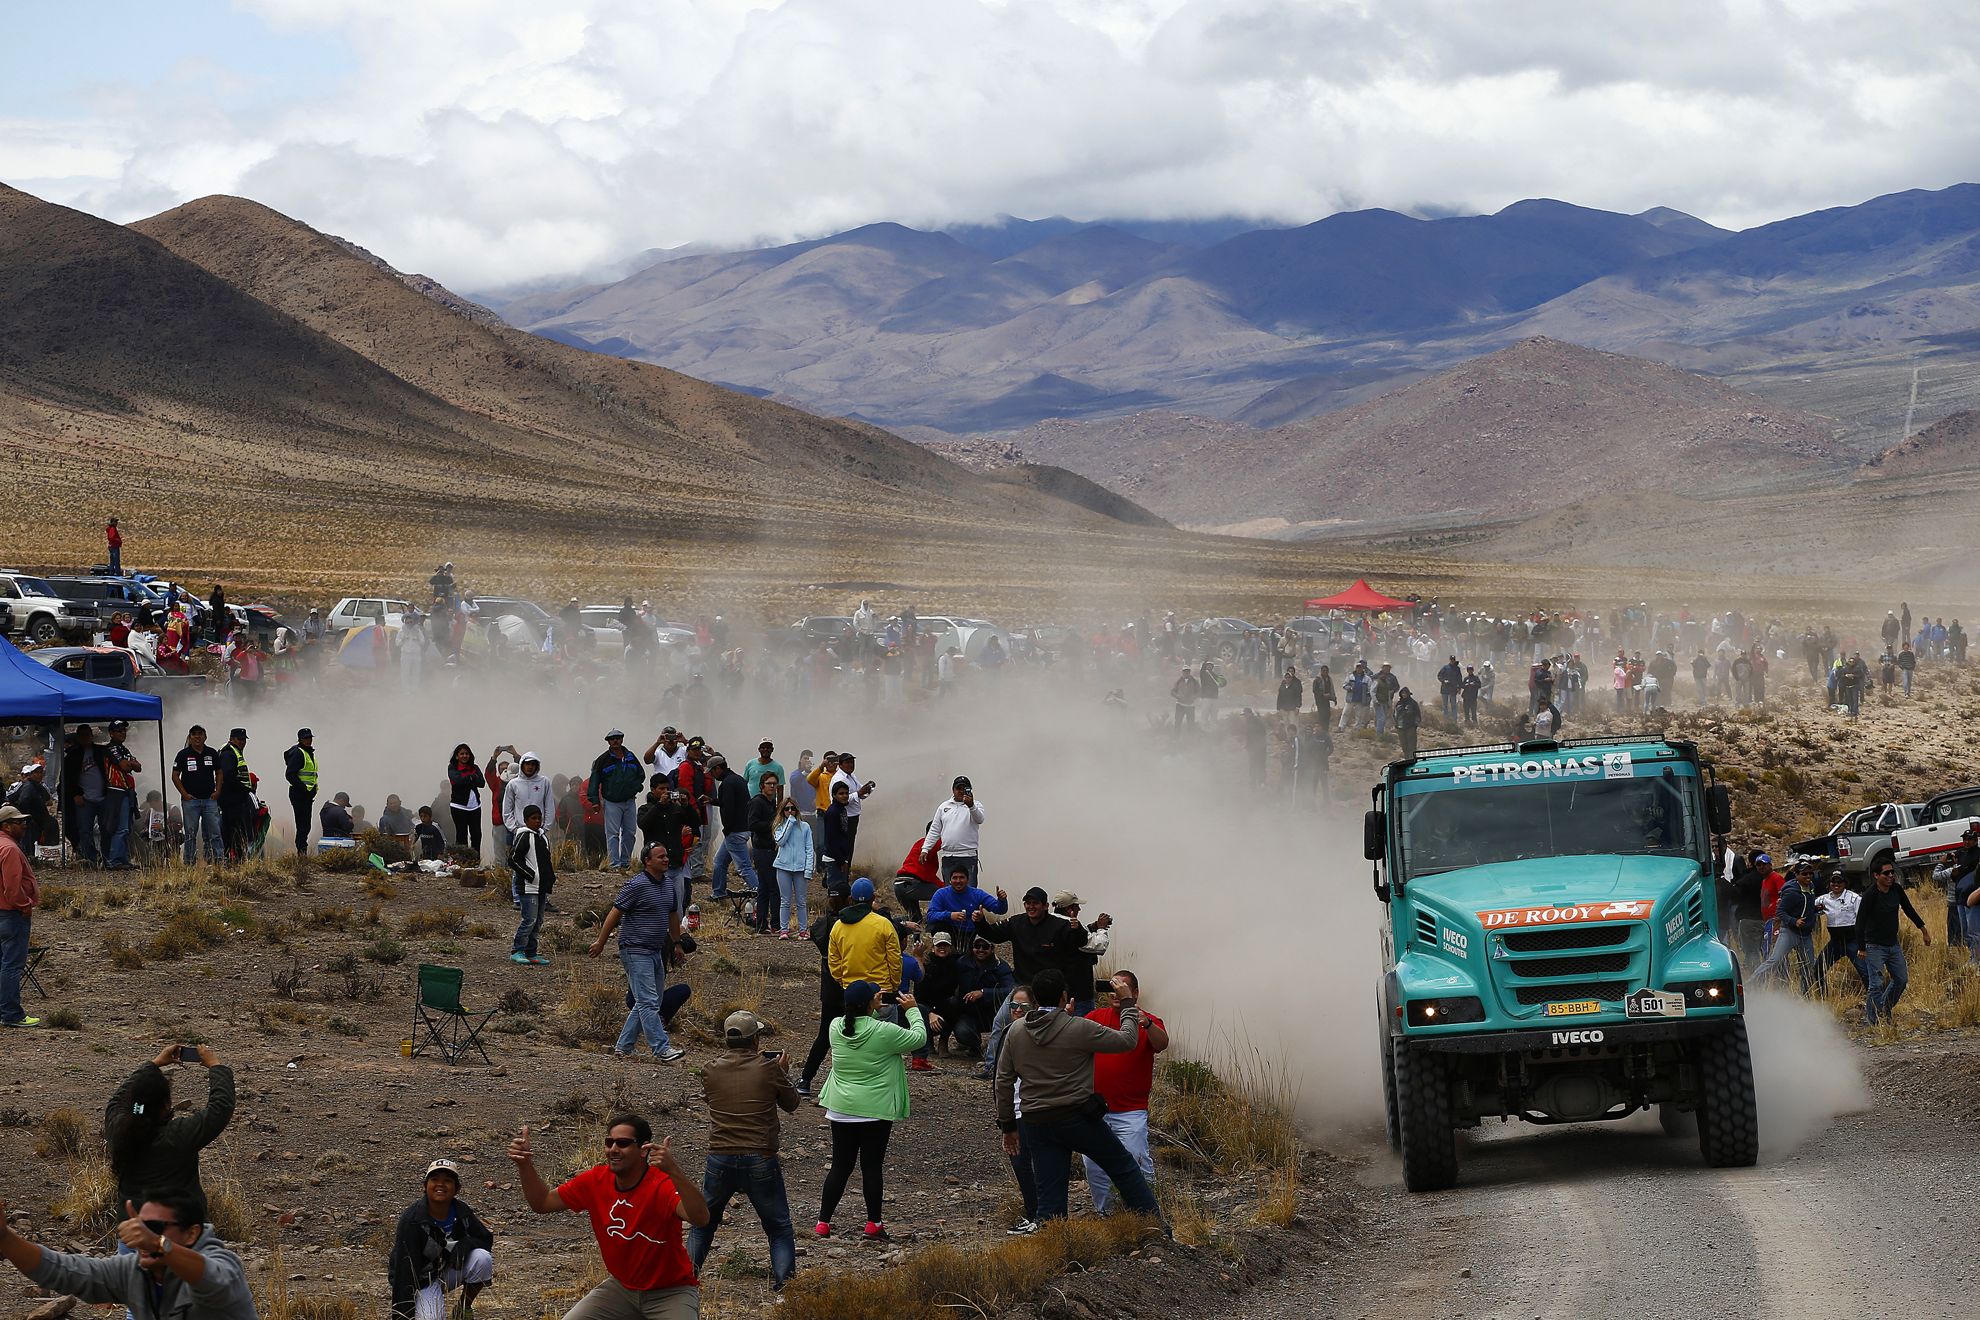 Dakar 2014 Trucks – Iveco Trucks in Lead